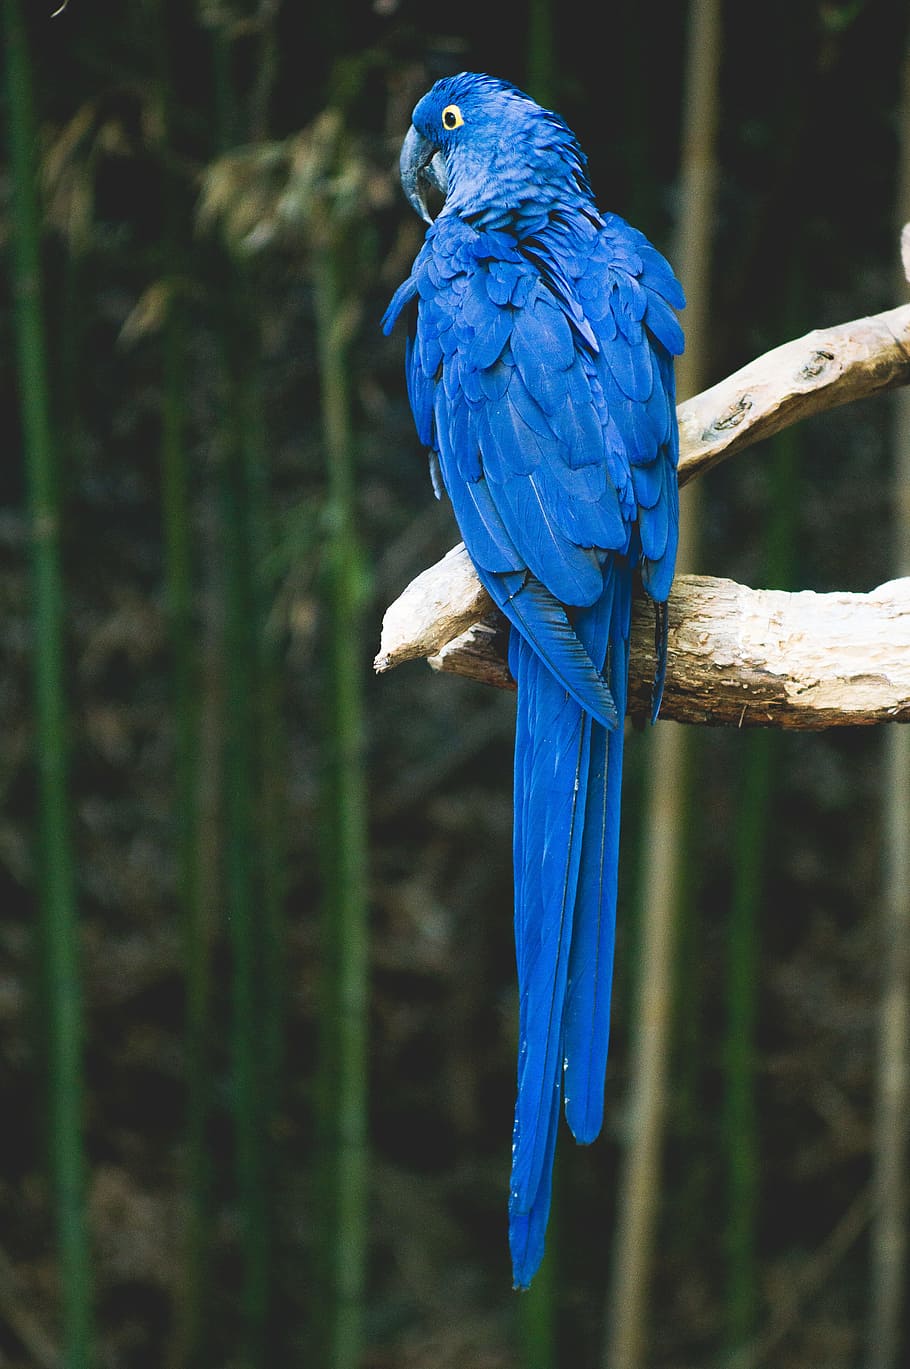 blue bird perch on brown tree, hyacinth macaw bird perched on tree branch